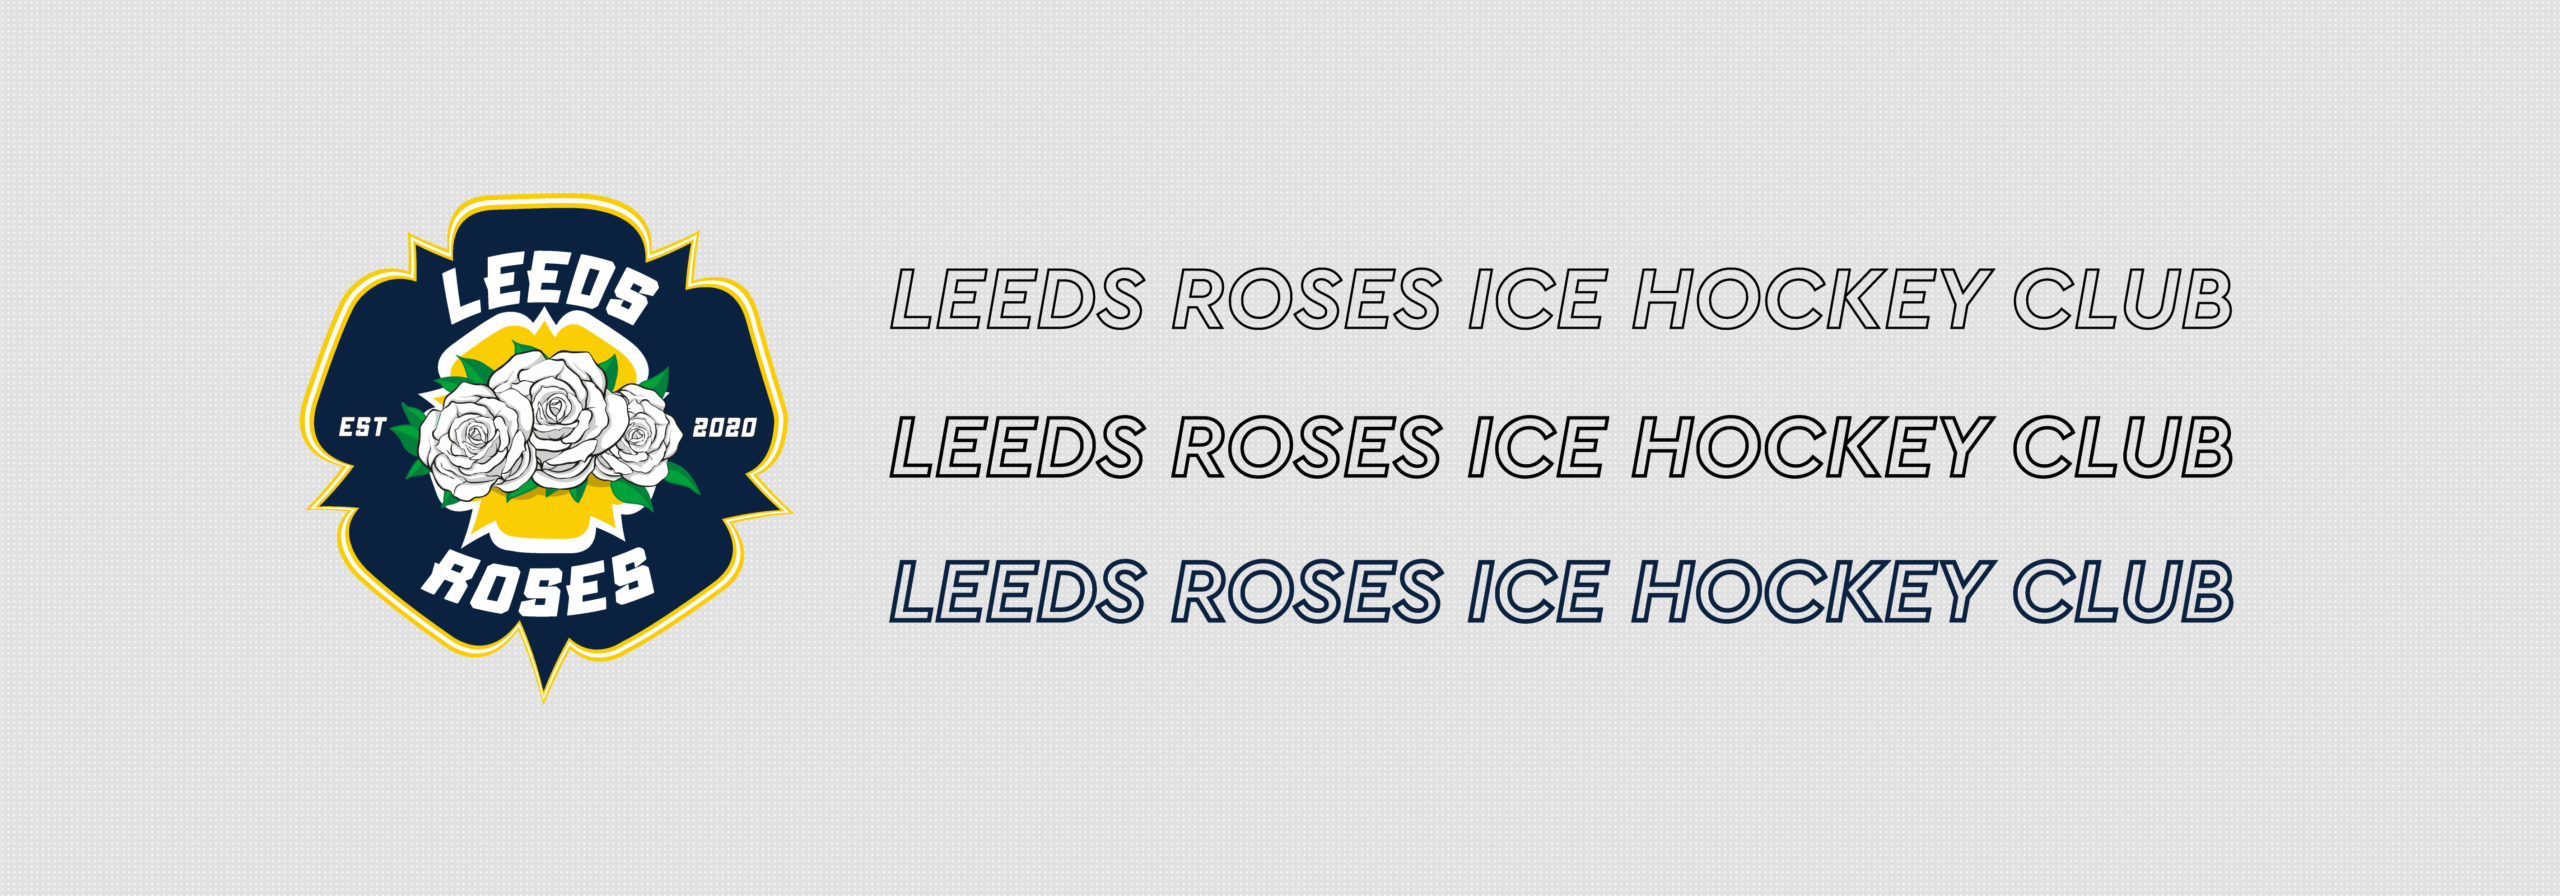 Leeds Roses Ice Hockey Club